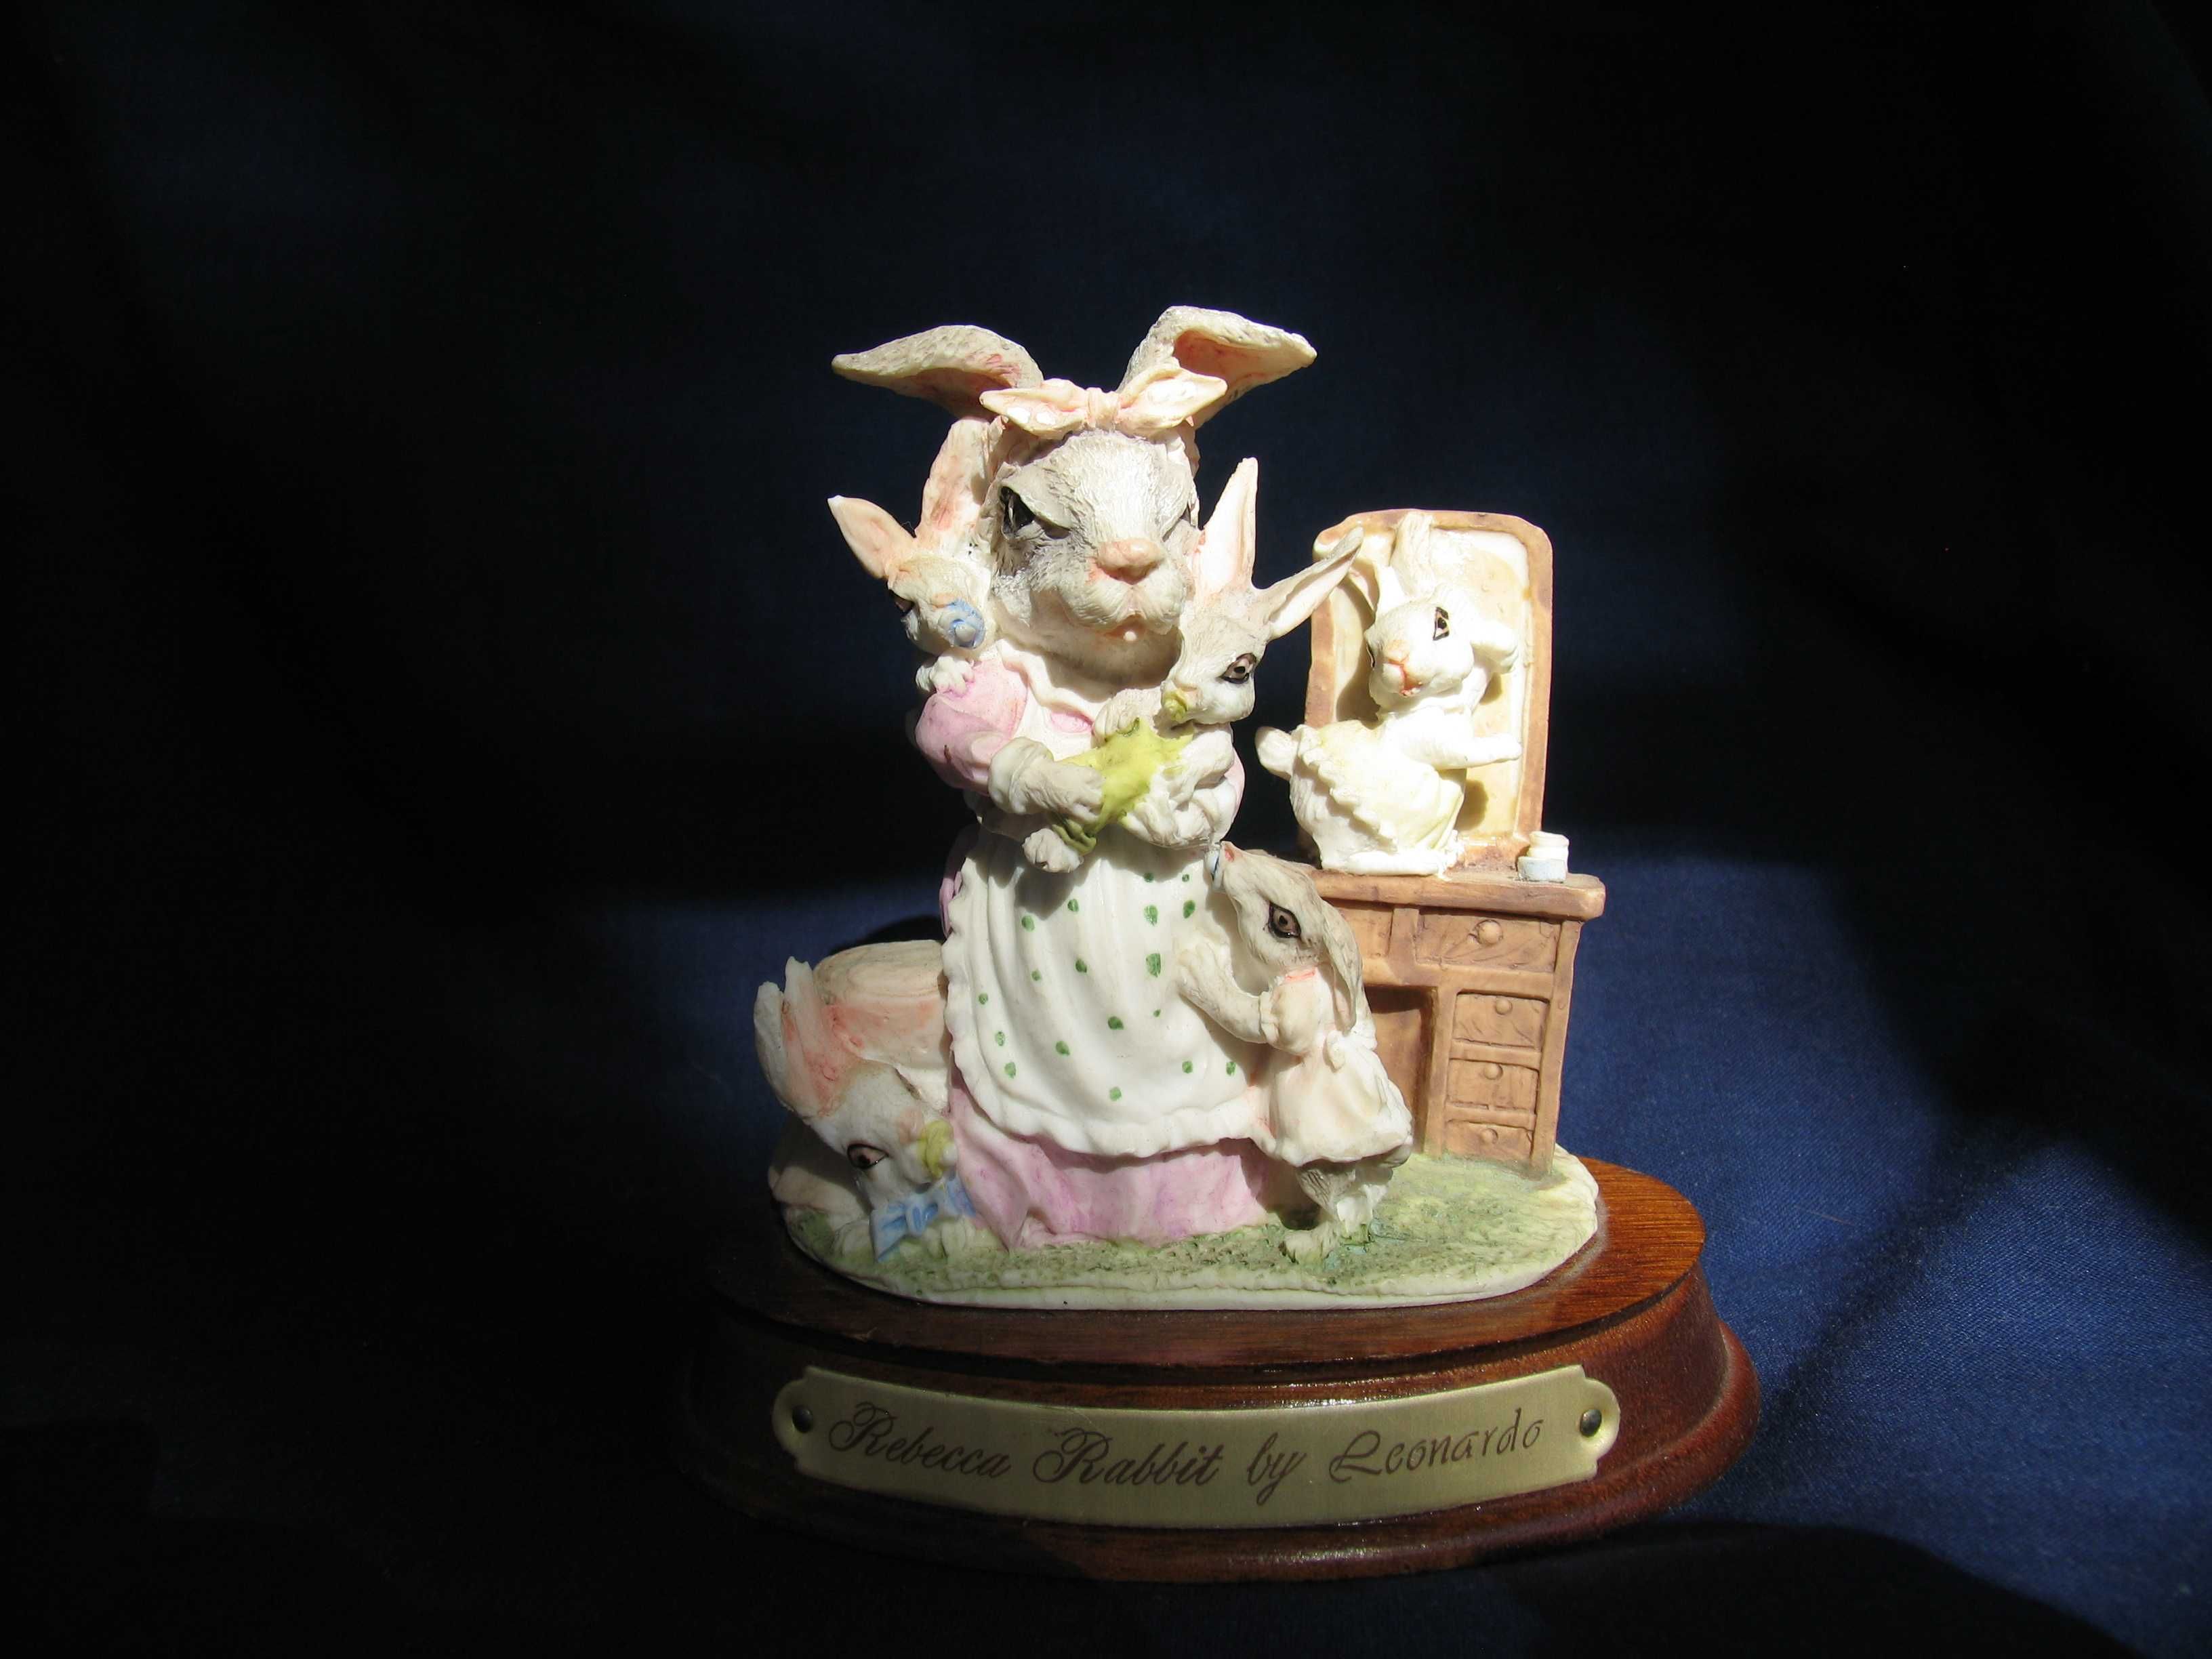 Little nook village  Rebecca Rabbit by Leonardo кролики бу